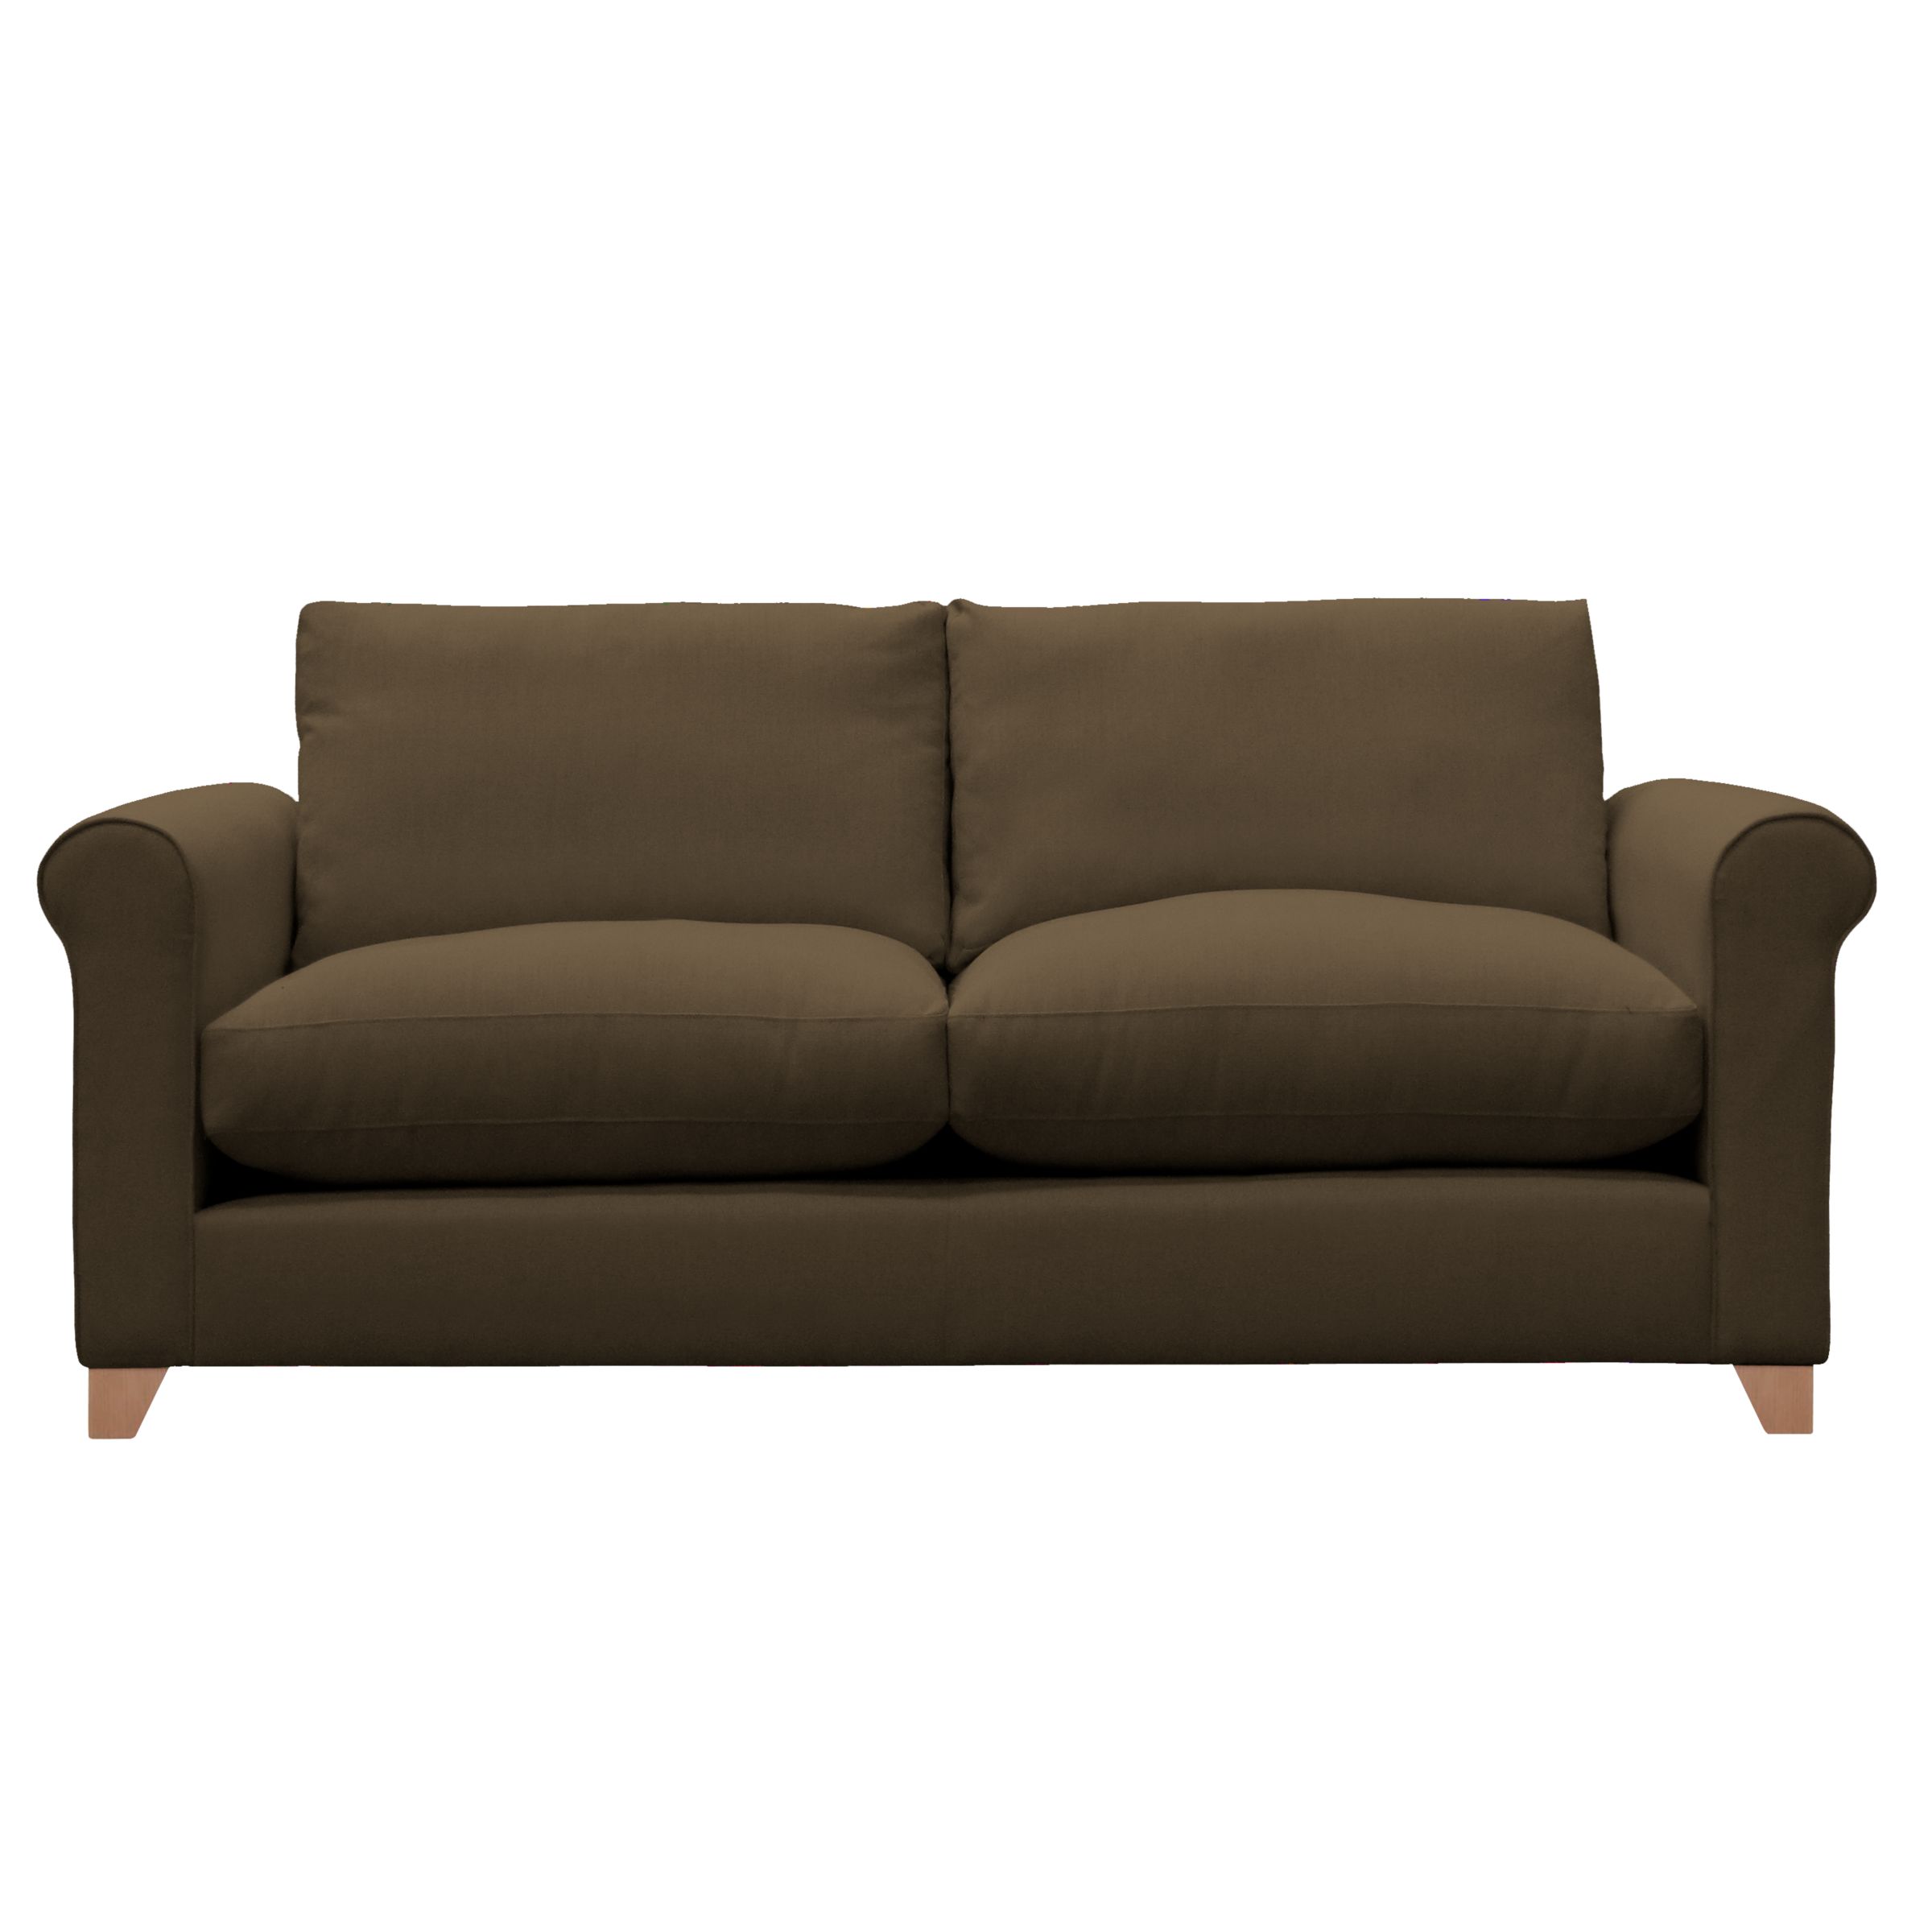 John Lewis Options Scroll Arm Large Sofa, Eaton Chocolate, width 192cm